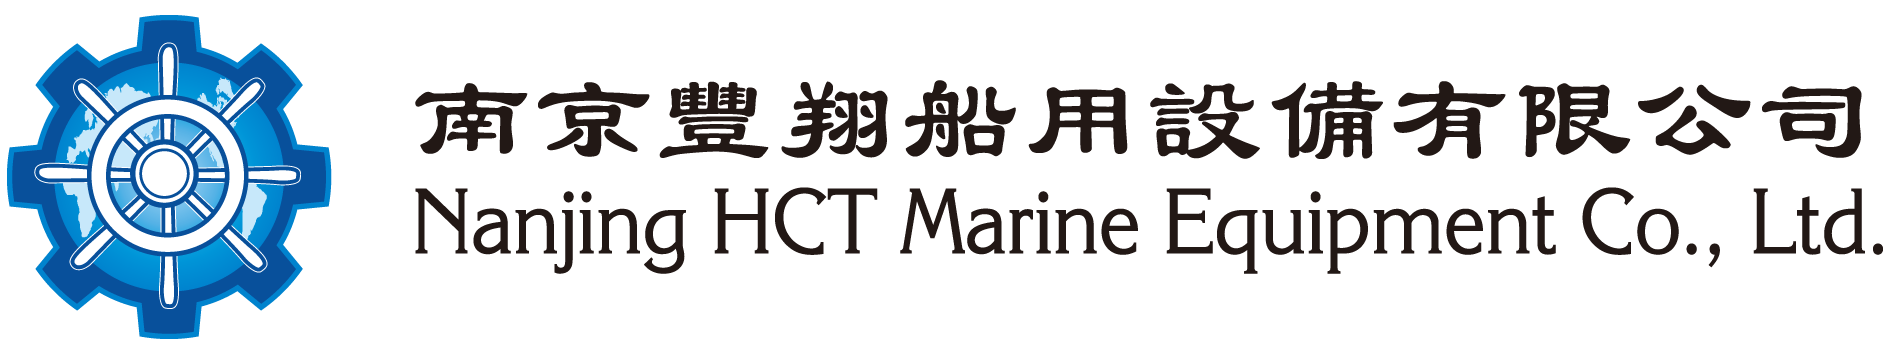 Nanjing HCT Marine Equipment Co., Ltd.